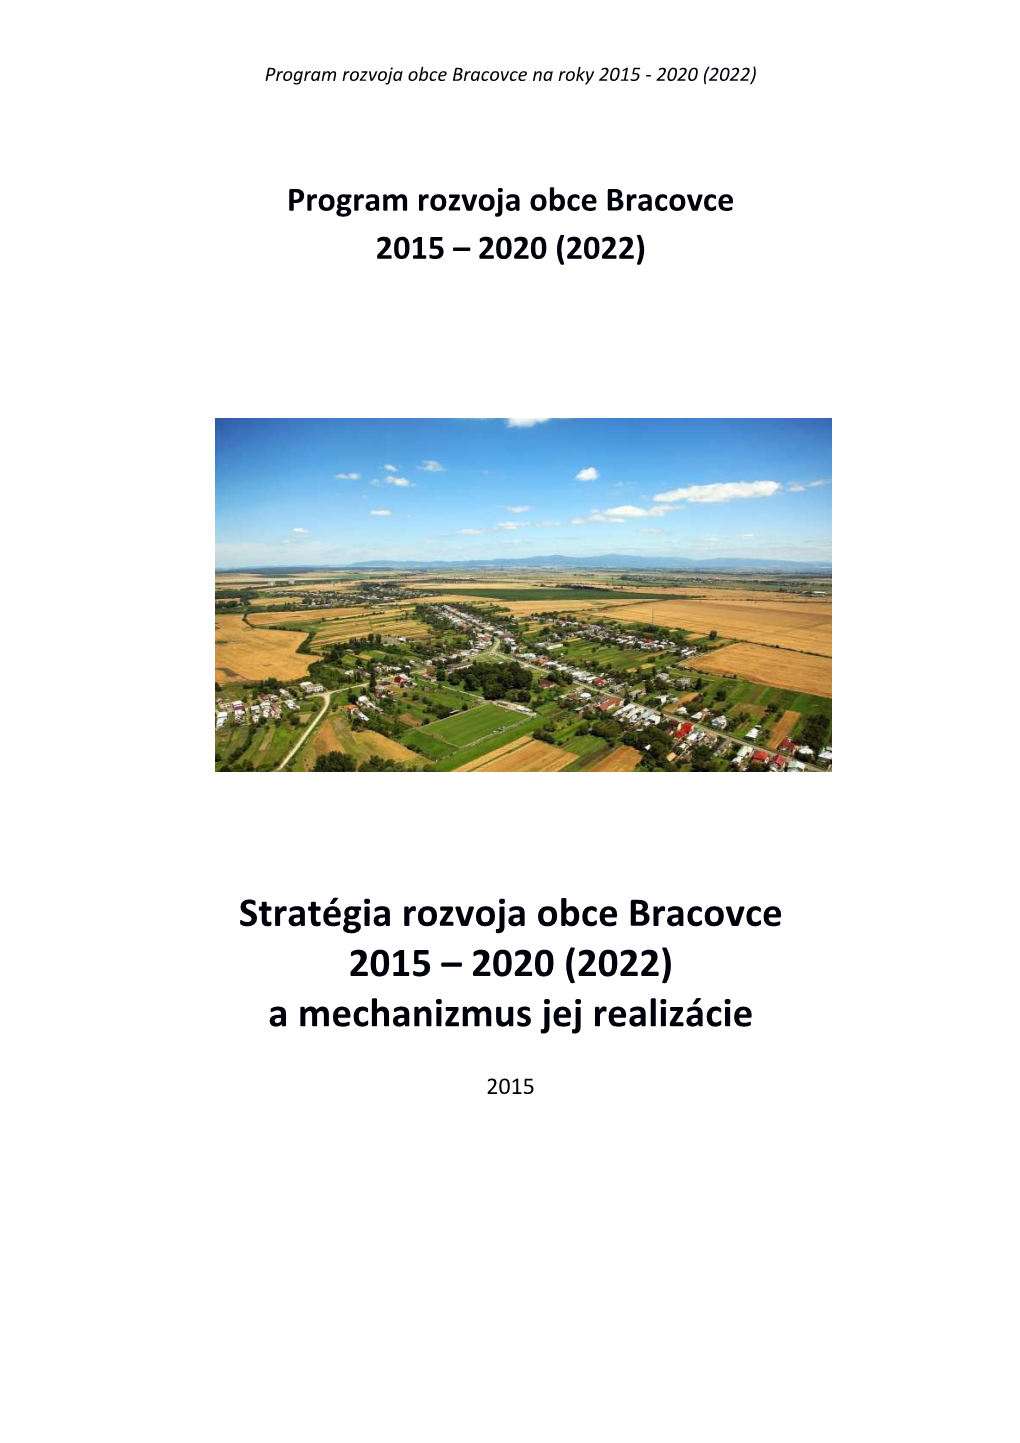 Program Rozvoja Obce Bracovce 2015 – 2020 (2022)